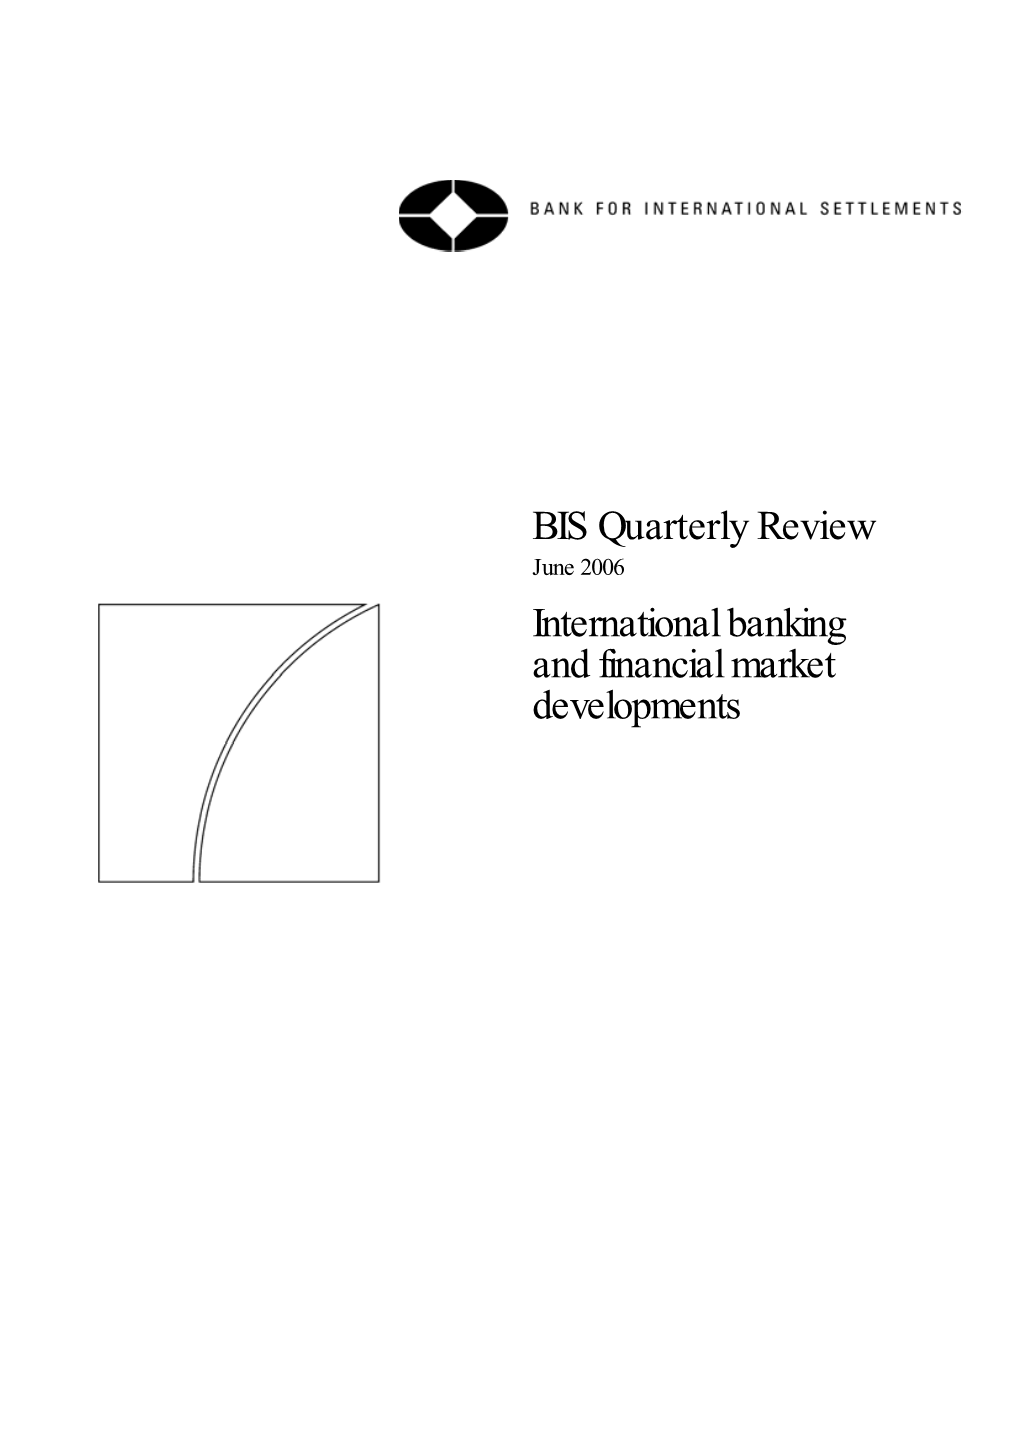 BIS Quarterly Review June 2006 International Banking and Financial Market Developments